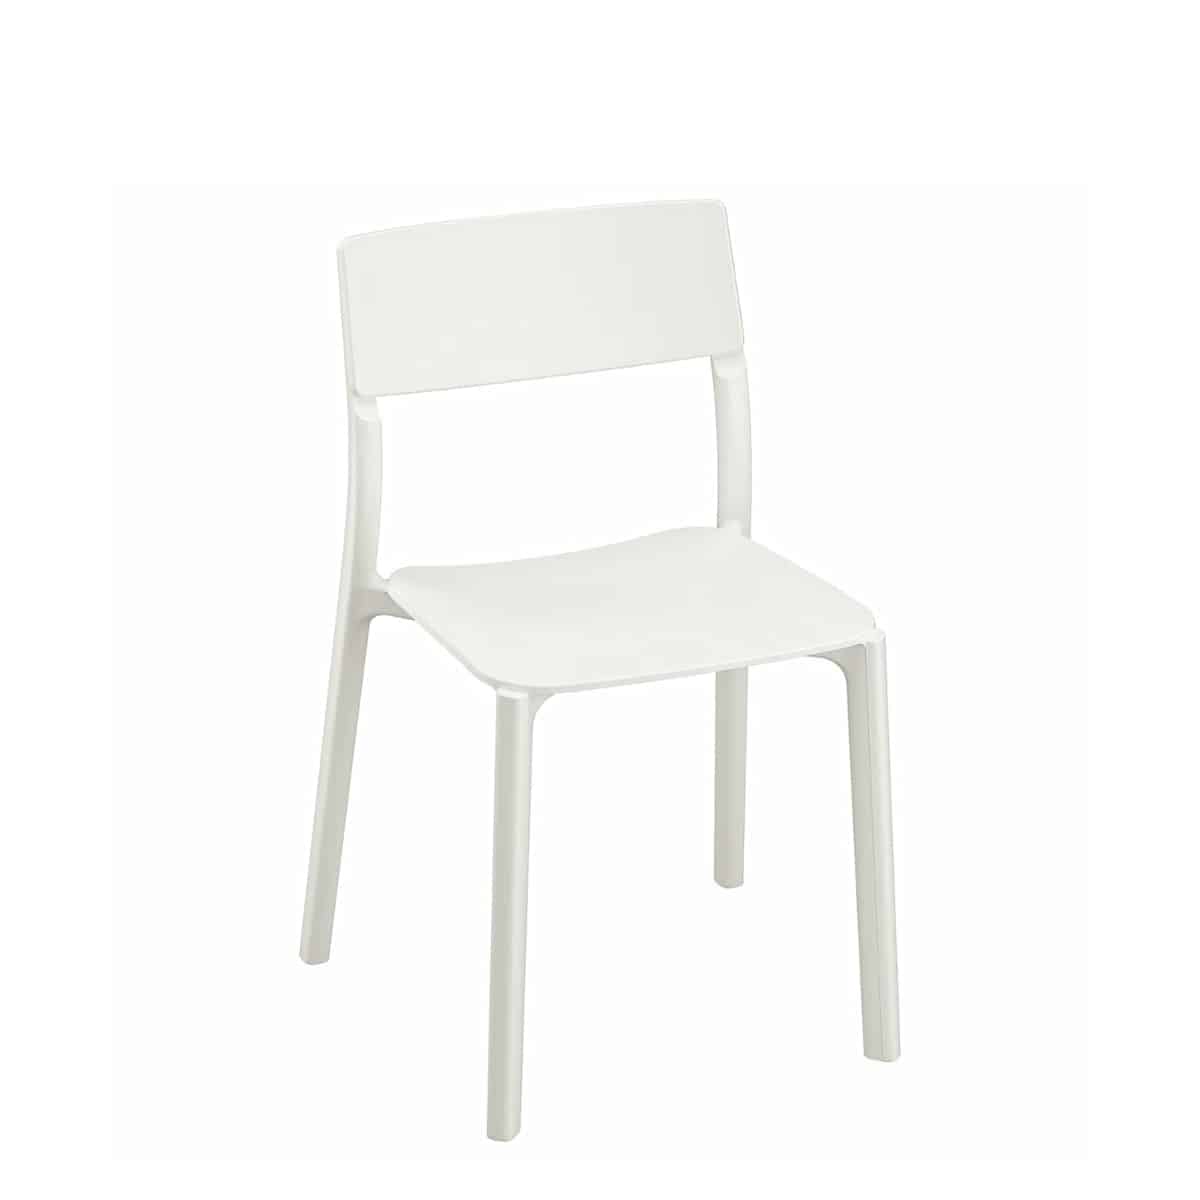 Jannie stapelstoelen / horeca stoelen wit - Seat